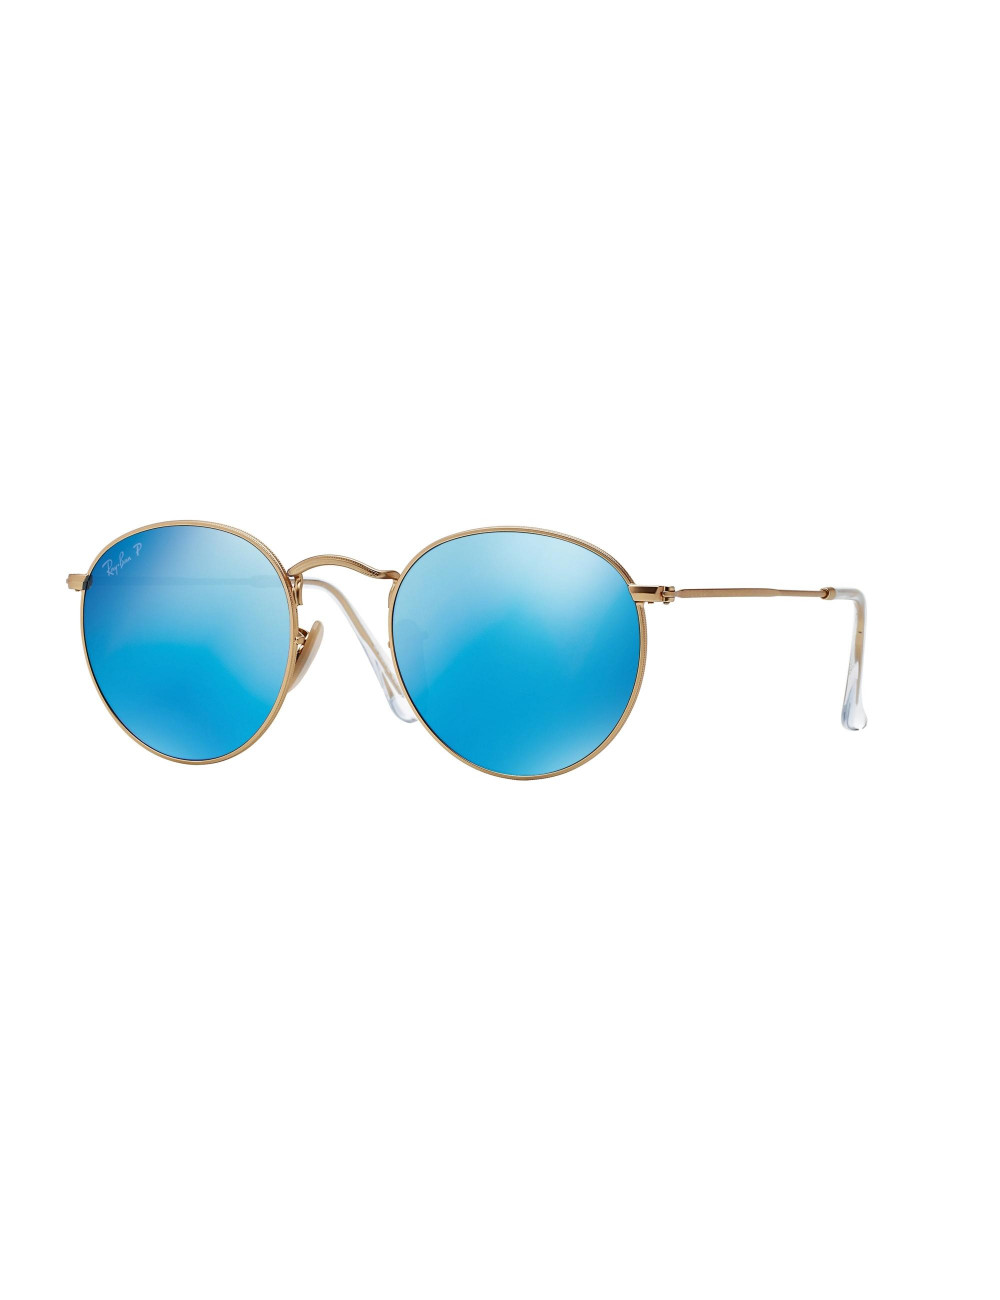 Ray Ban Round Metal RB3447 112/4L polarized sunglasses - Ottica Mauro